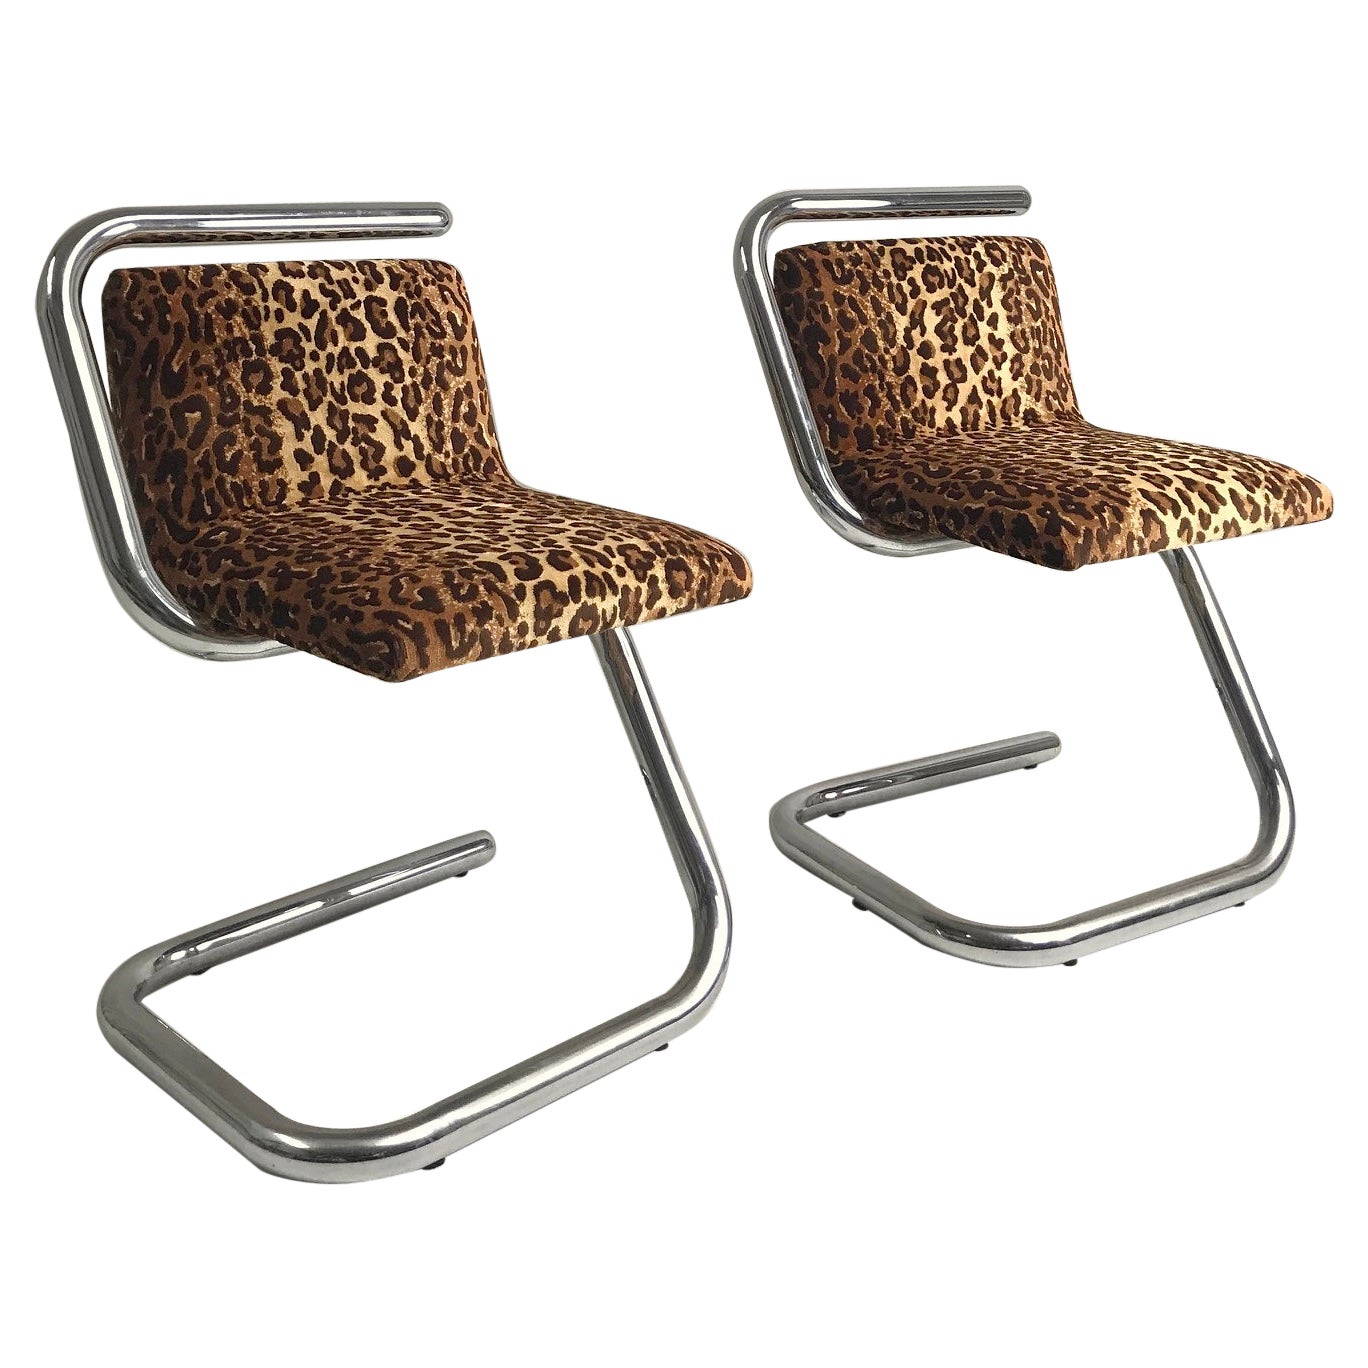 Pair of Mid-Century Modern Chairs, Chrome & Leopard Fabric, circa 1970, Italy